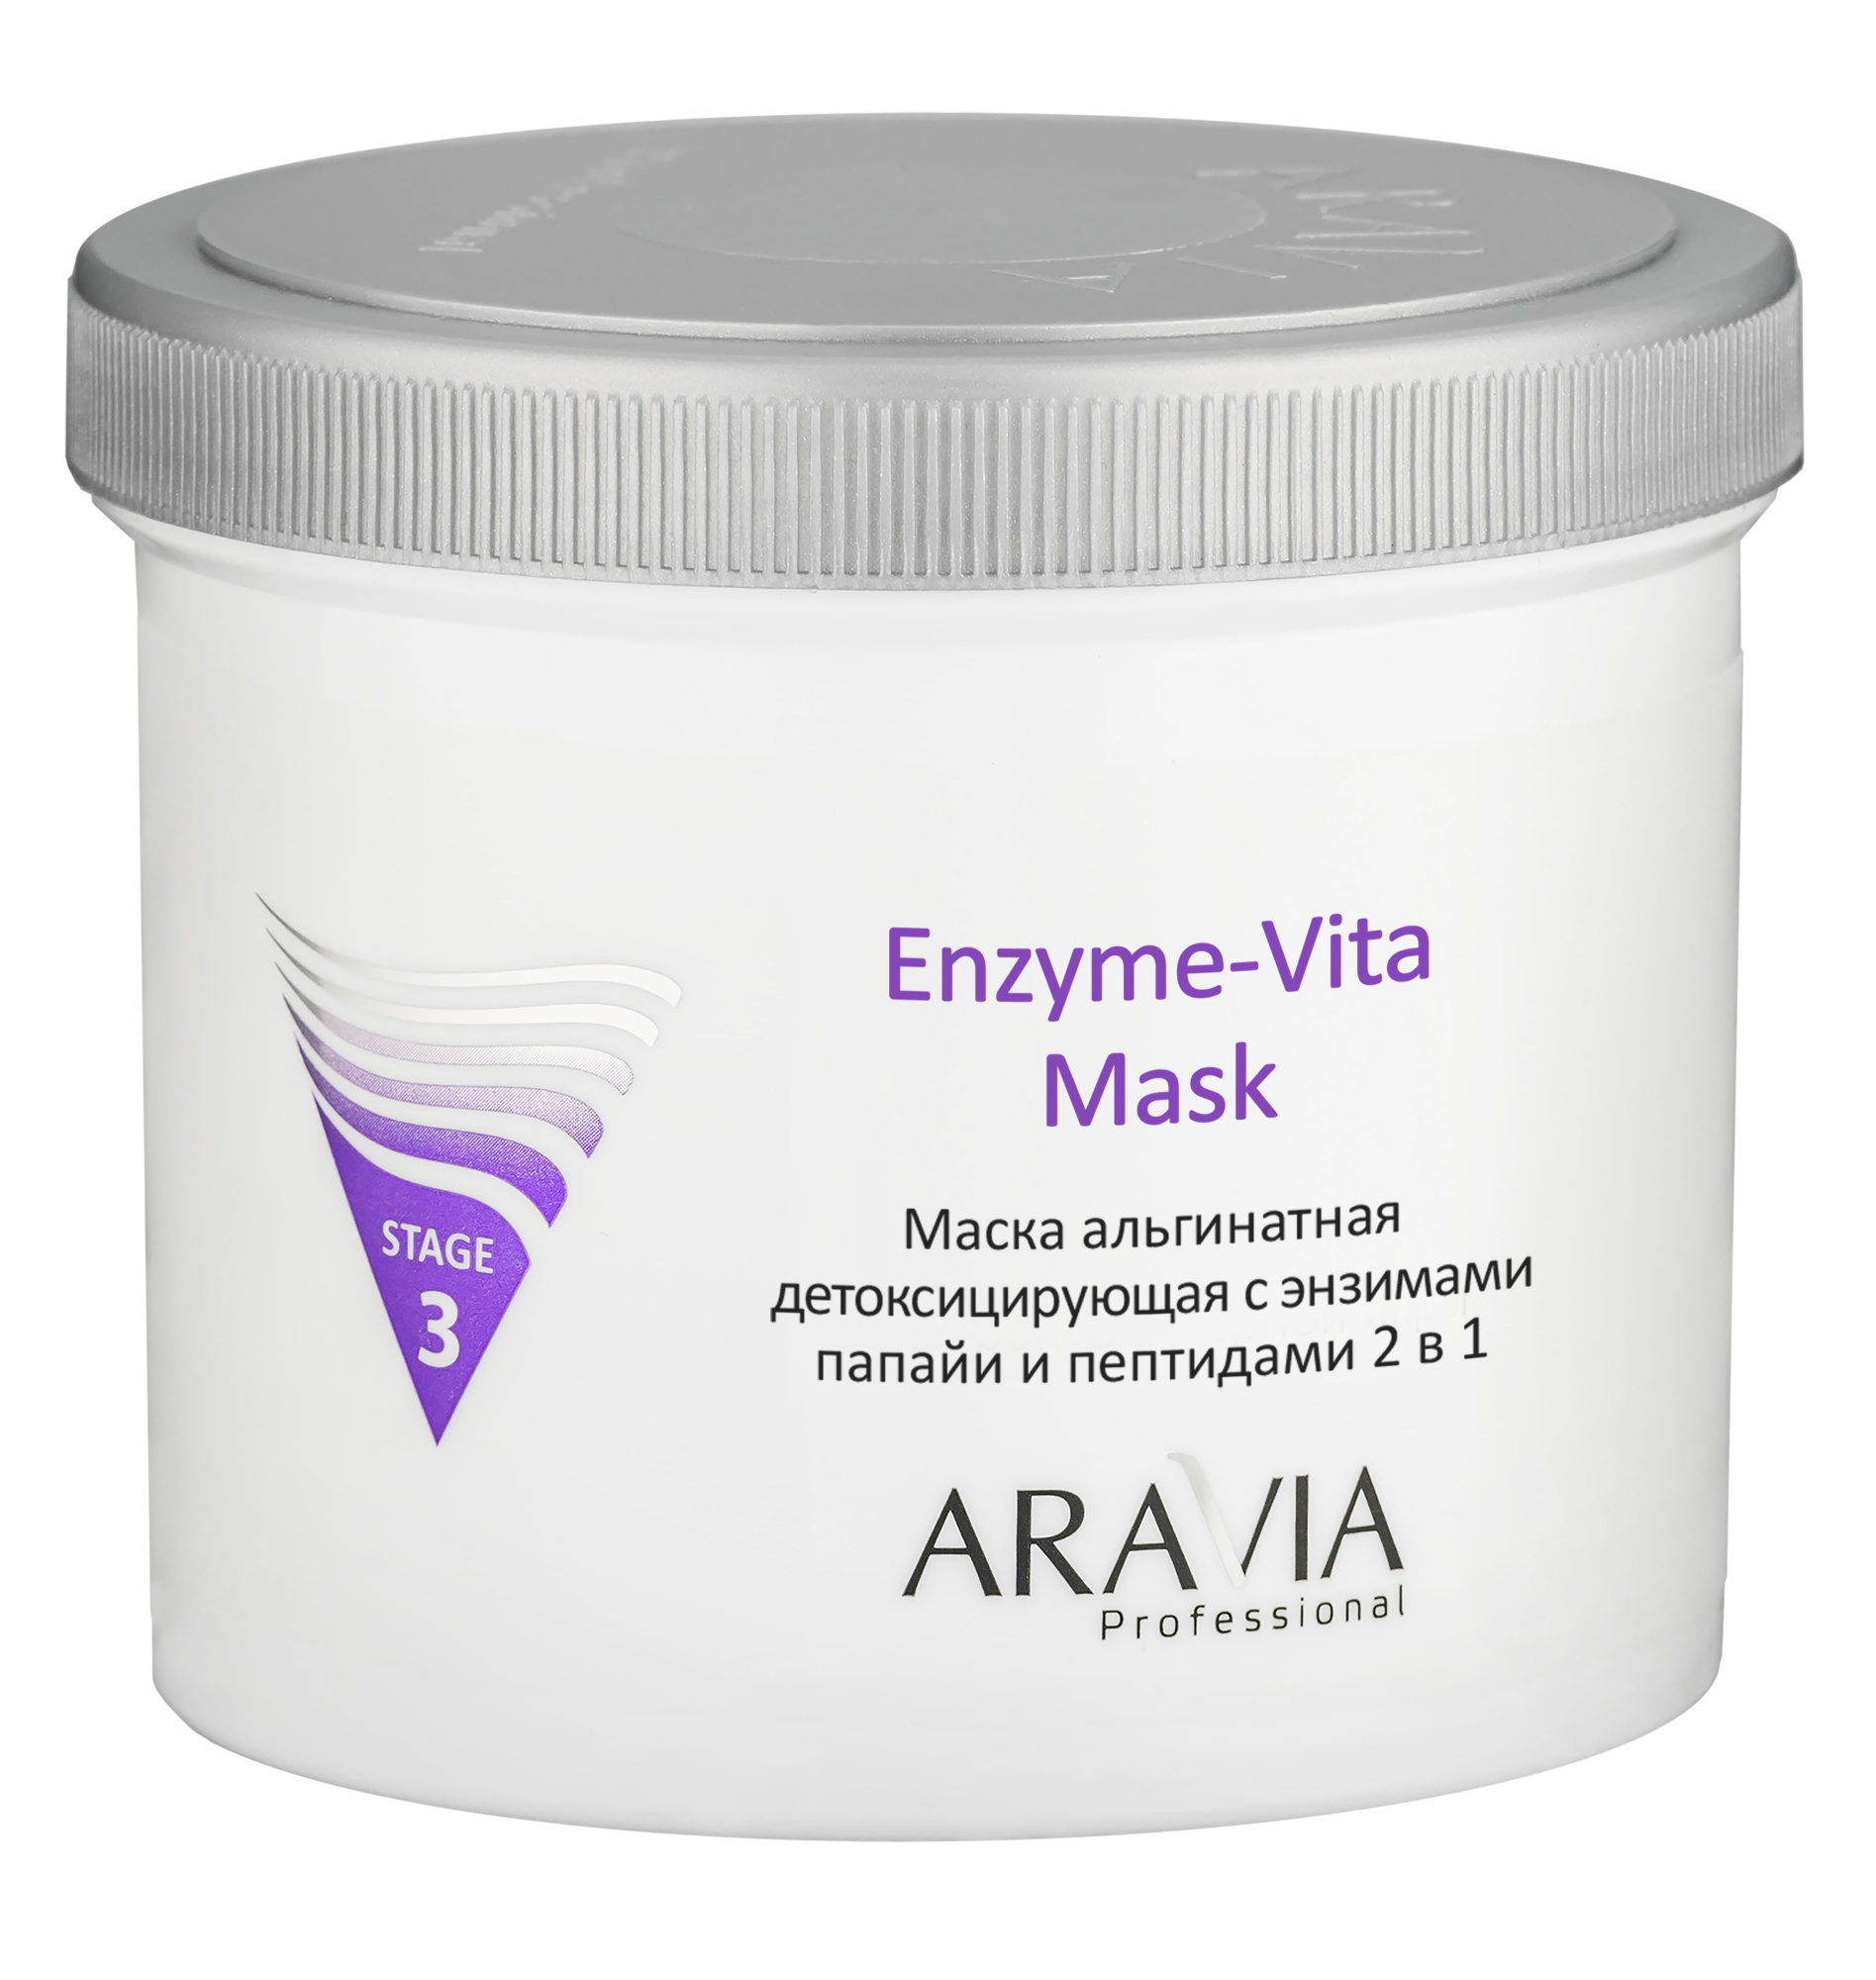 Aravia Professional Enzyme-Vita Mask Маска альгинатная детоксицирующая 2 в 1, 550мл